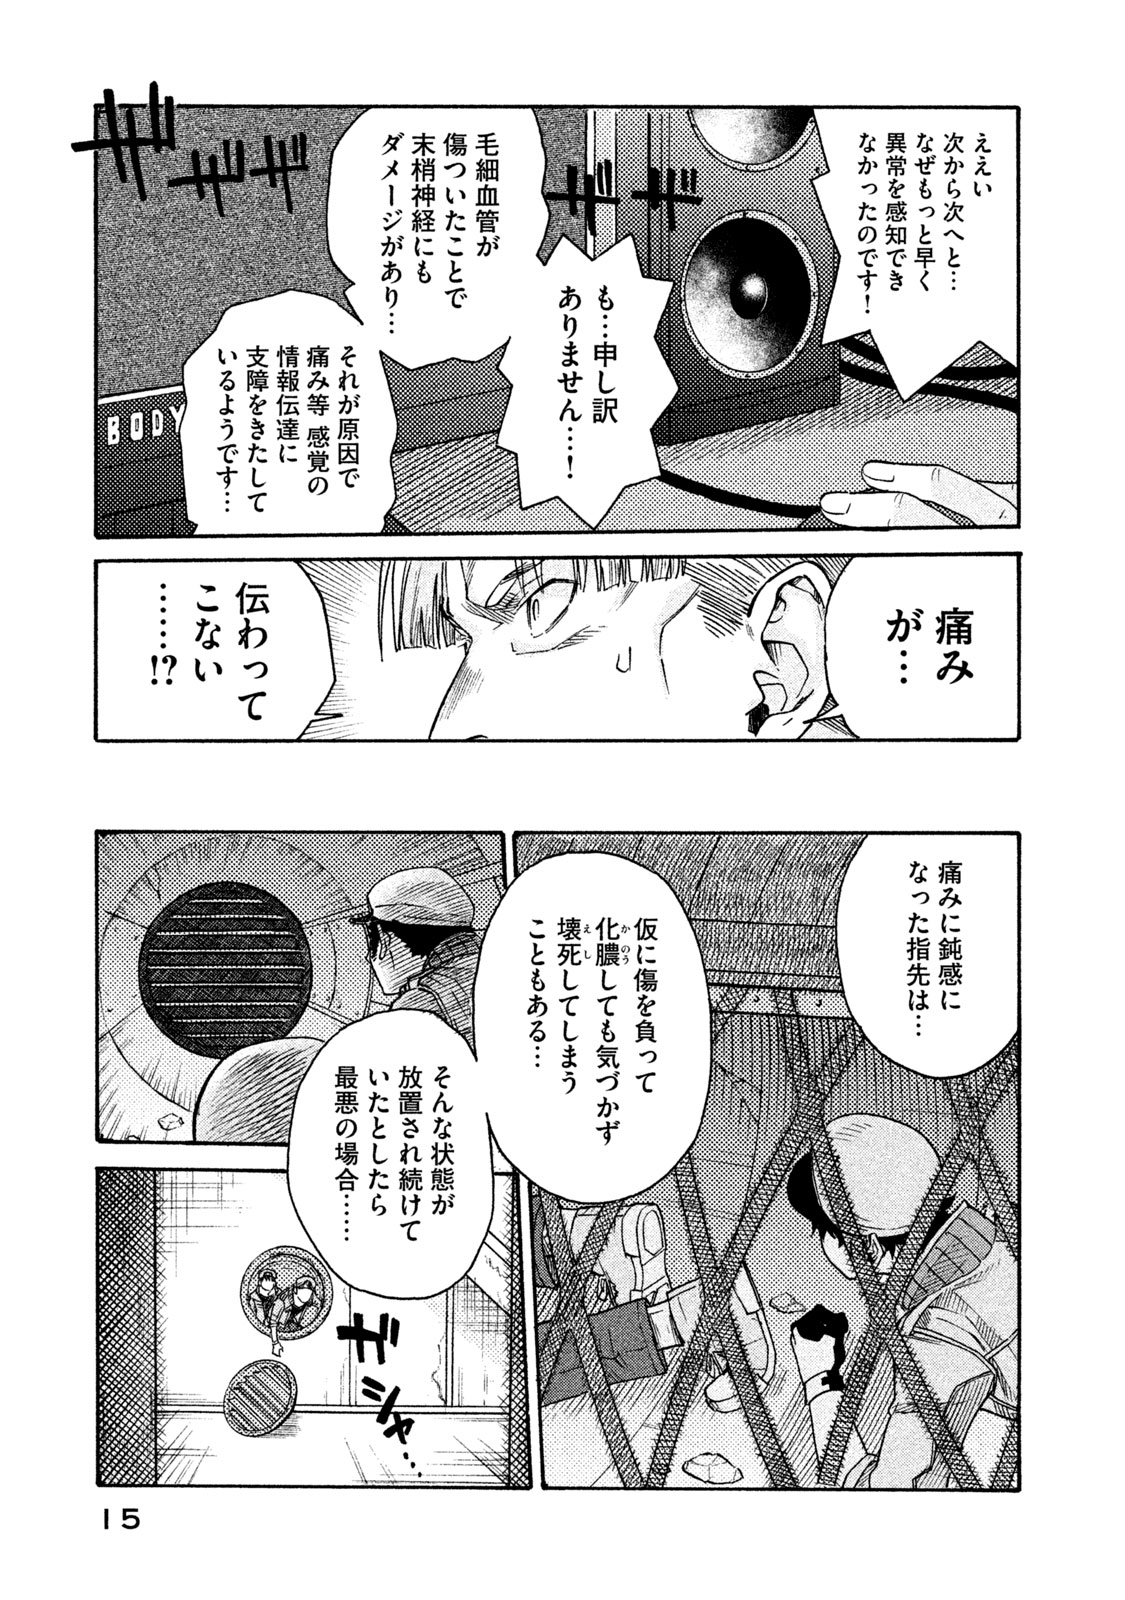 Hataraku Saibou BLACK - Chapter 25 - Page 17